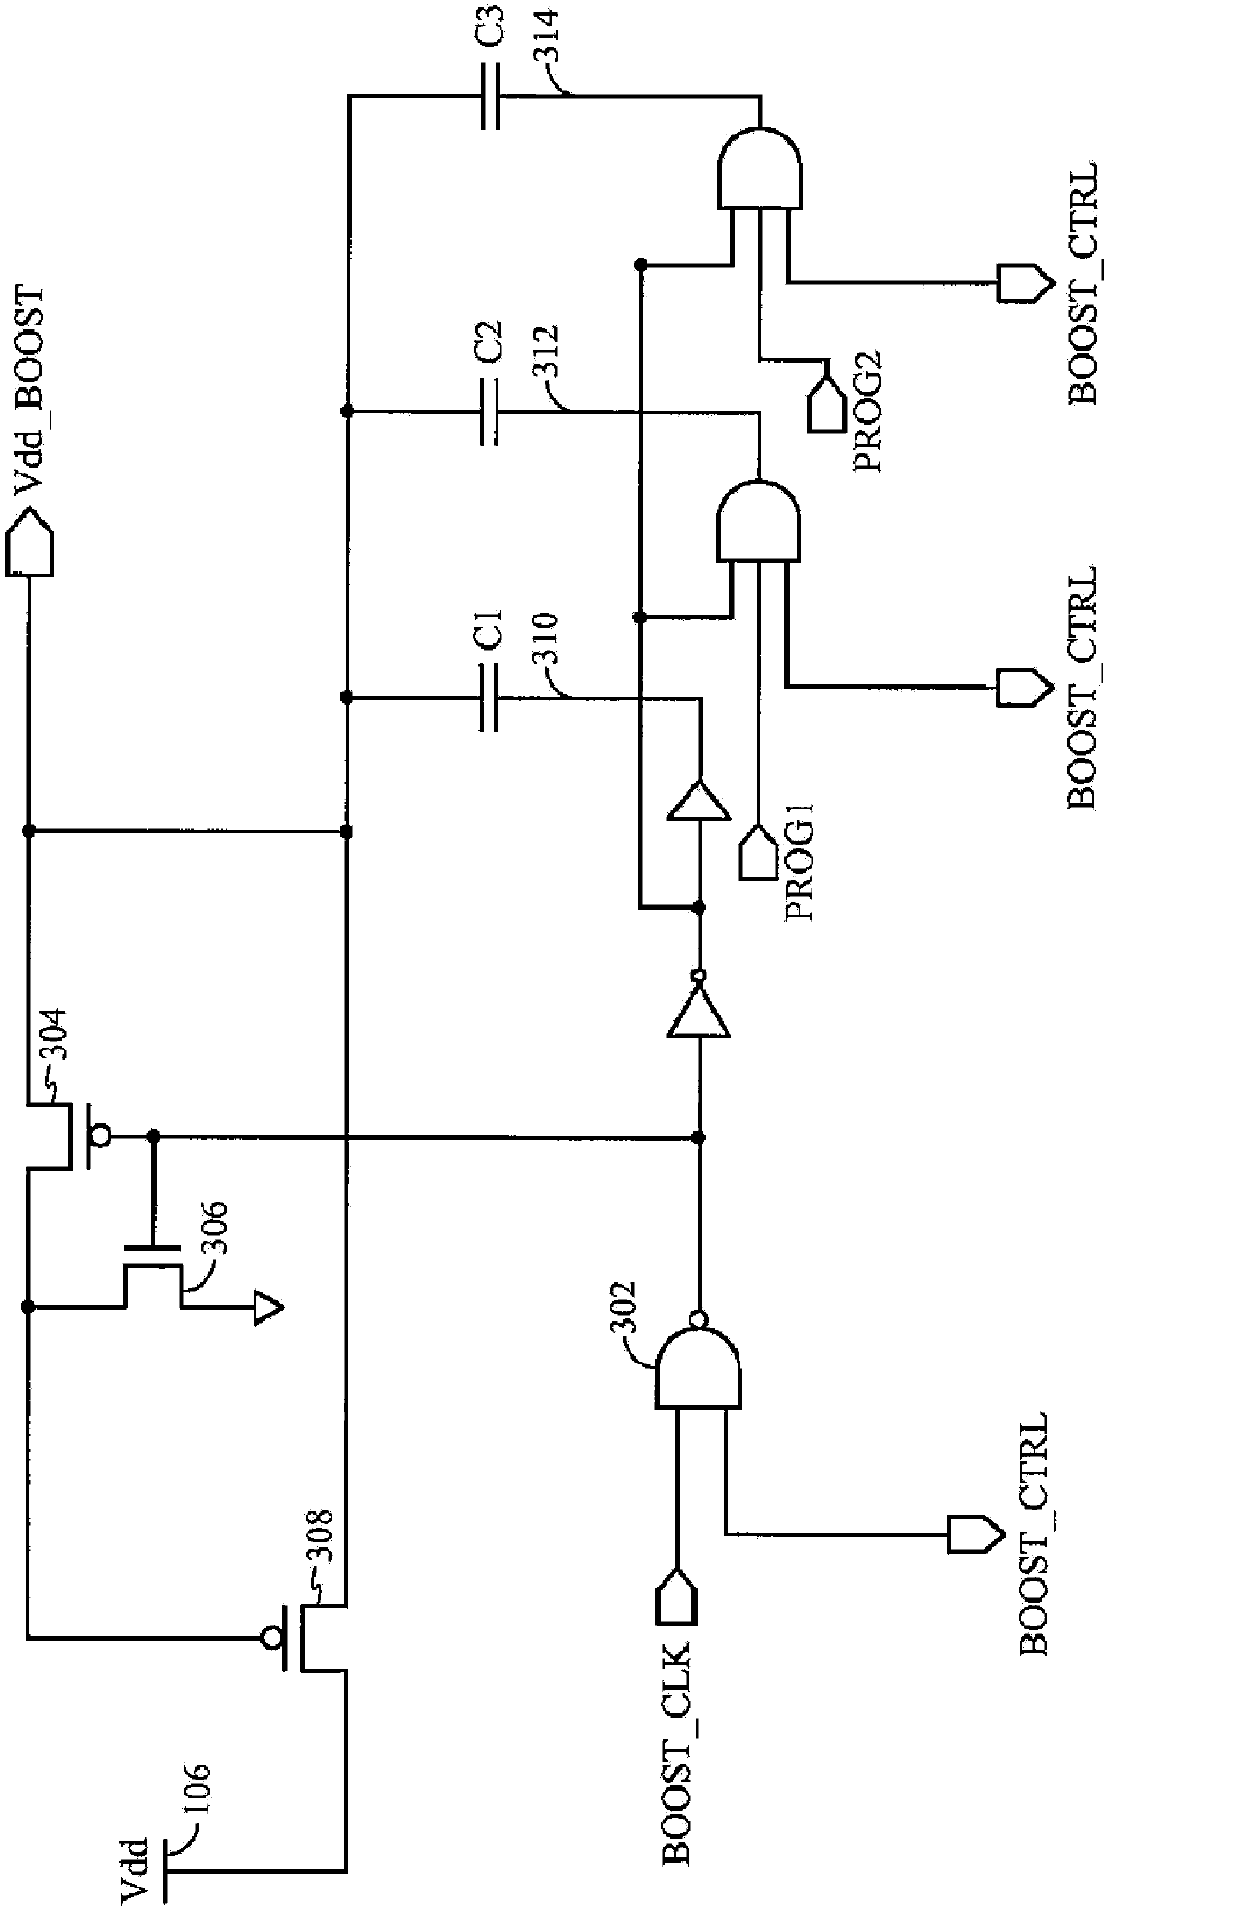 Adaptive read wordline voltage boosting apparatus and method for multi-port SRAM